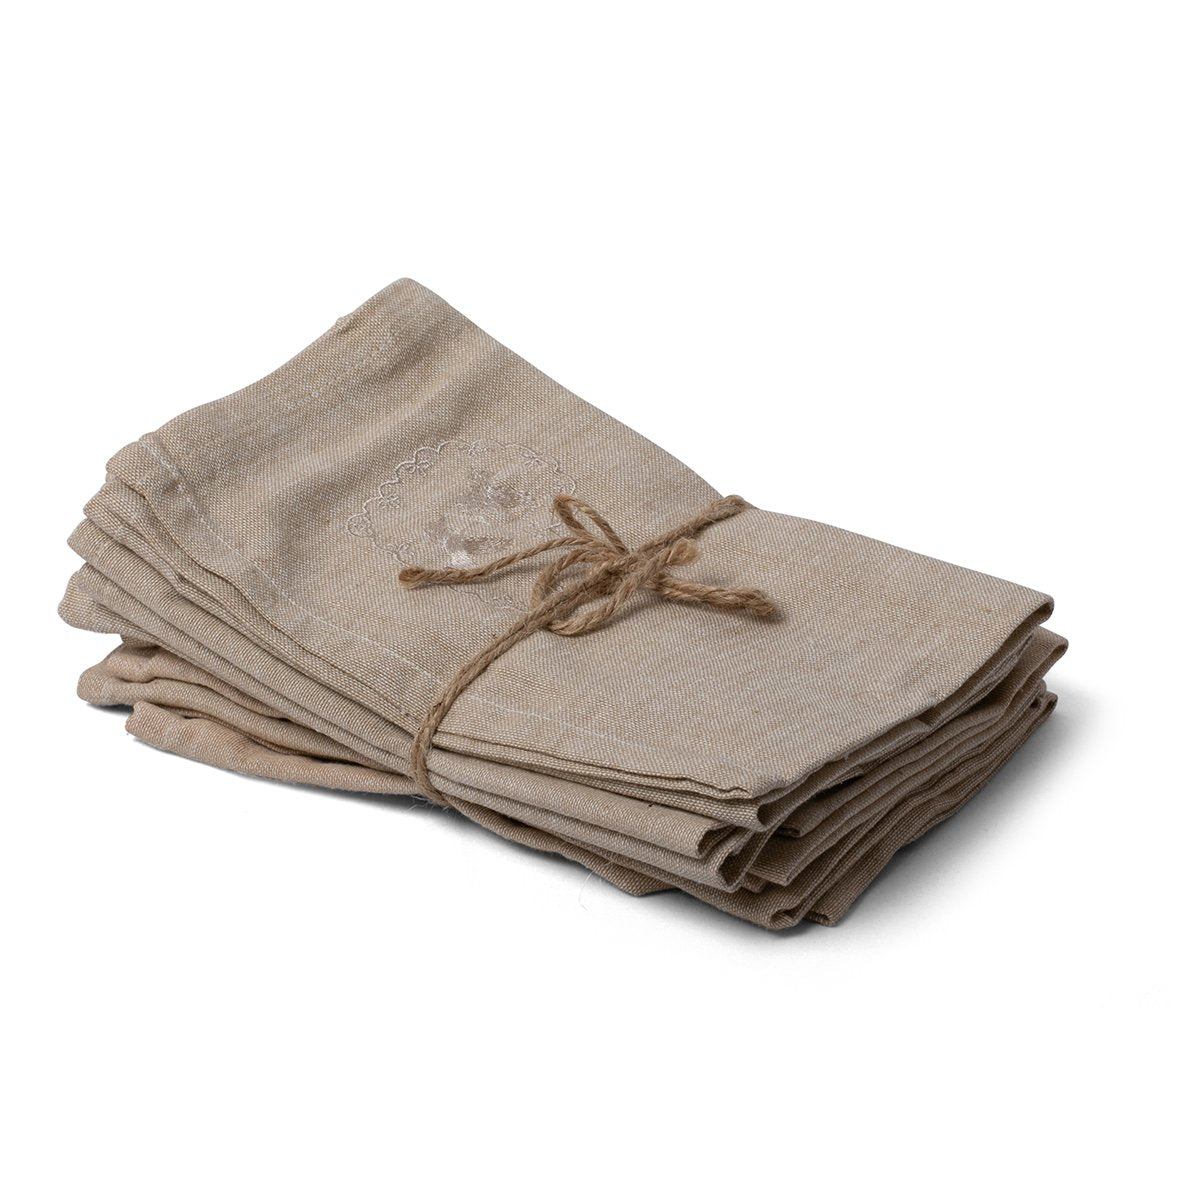 Handloom Cotton Natural Woven Napkins - Set of 4 - Notbrand